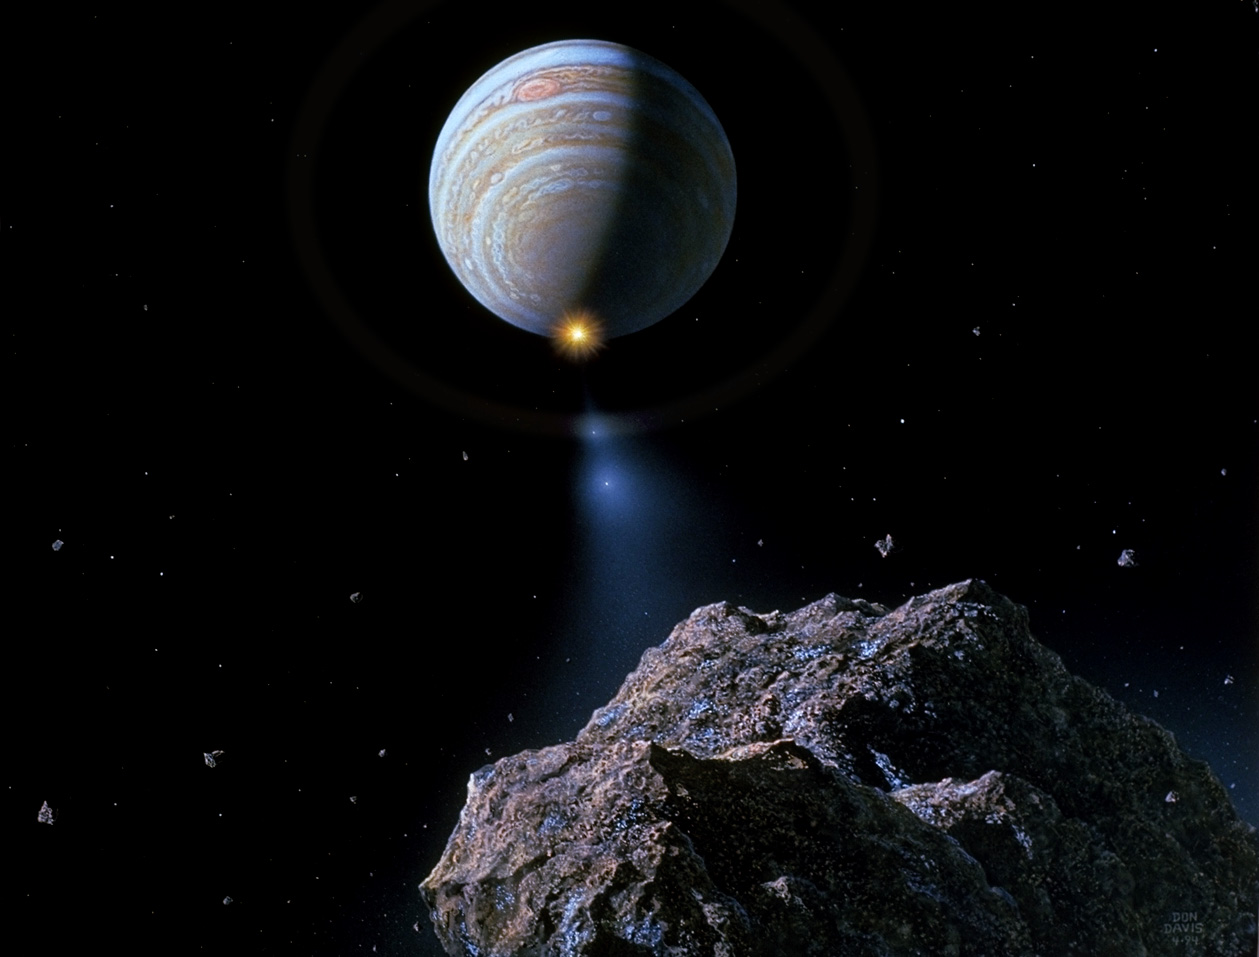 http://www.daskalo.com/petar23/files/2015/11/Comet_Shoemaker-Levy_9_approaching_Jupiter.jpg